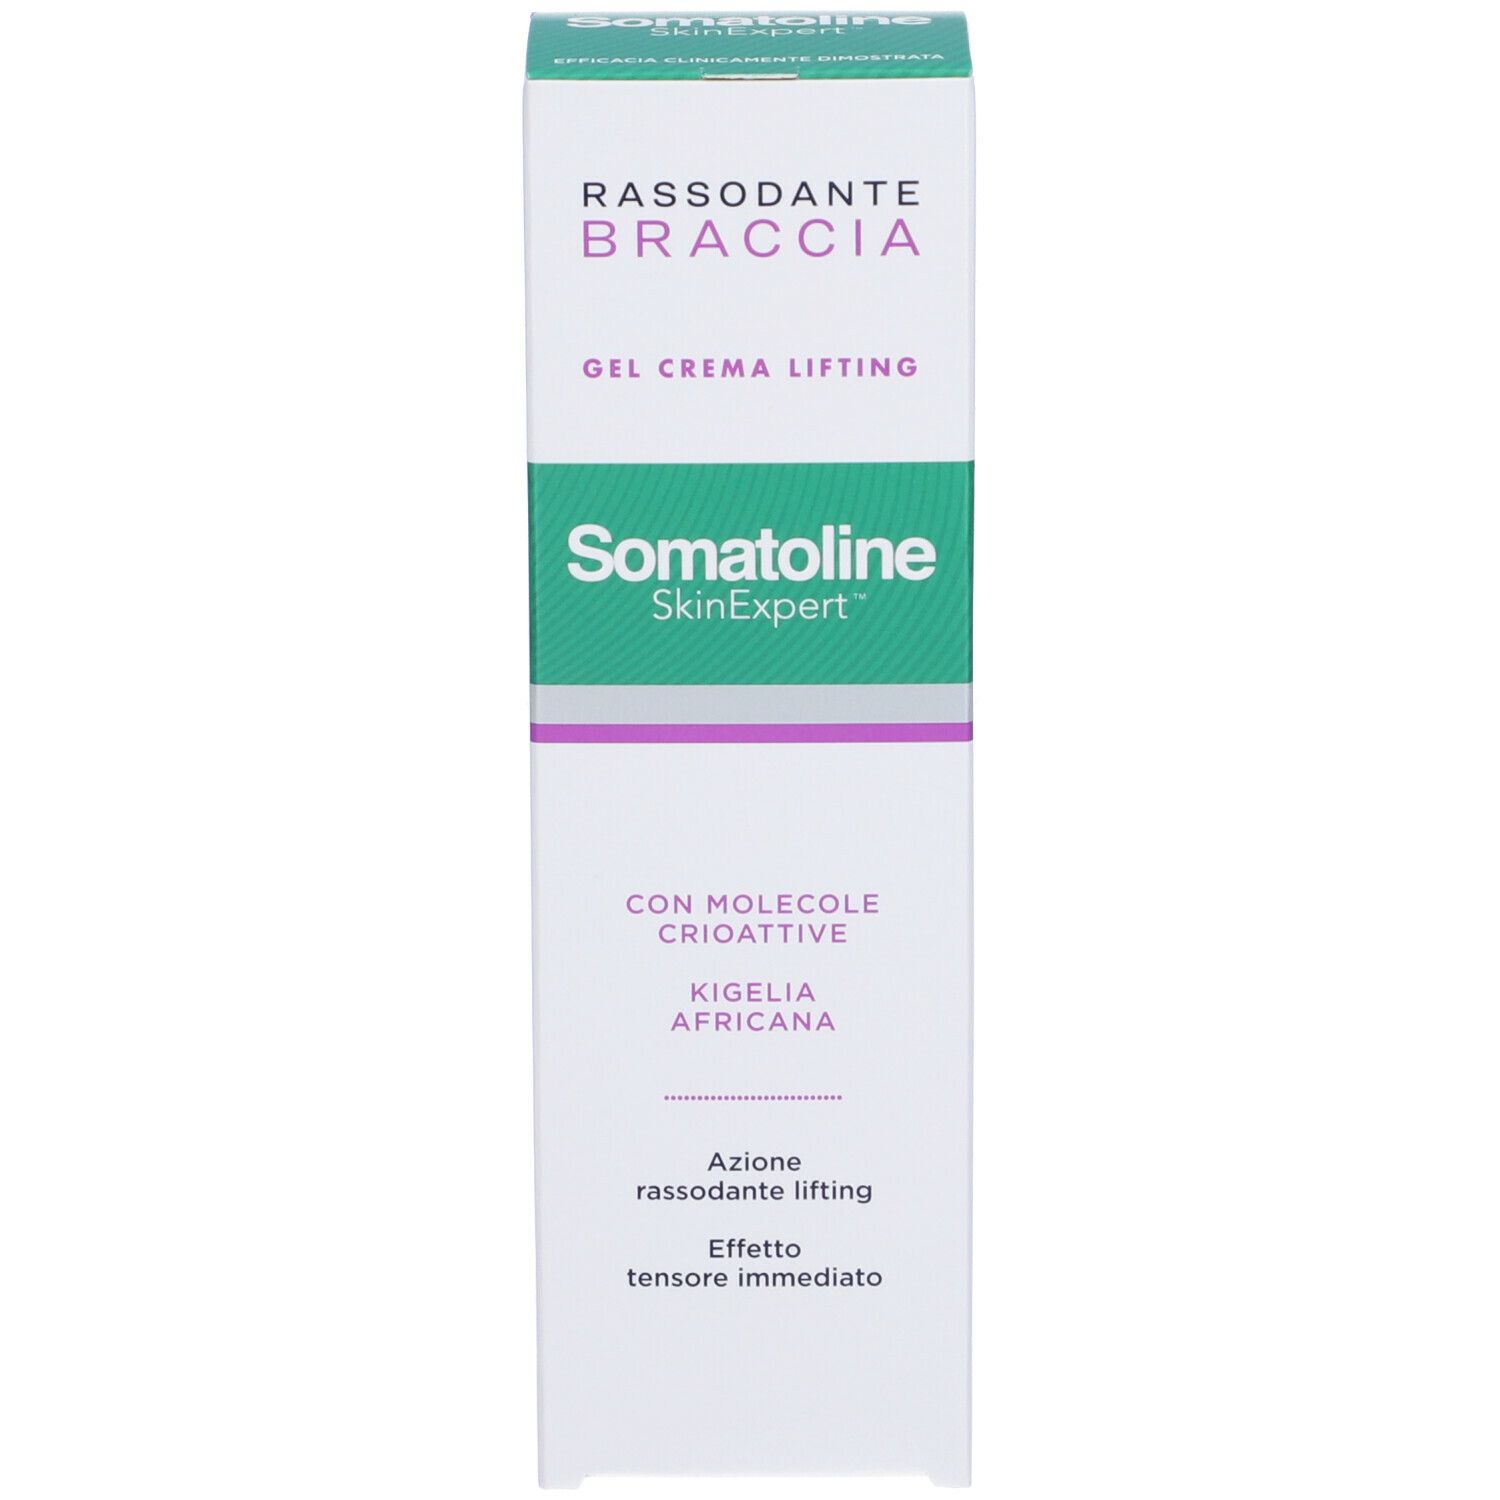 Somatoline Cosmetics® Rassodante Braccia Lift Effect